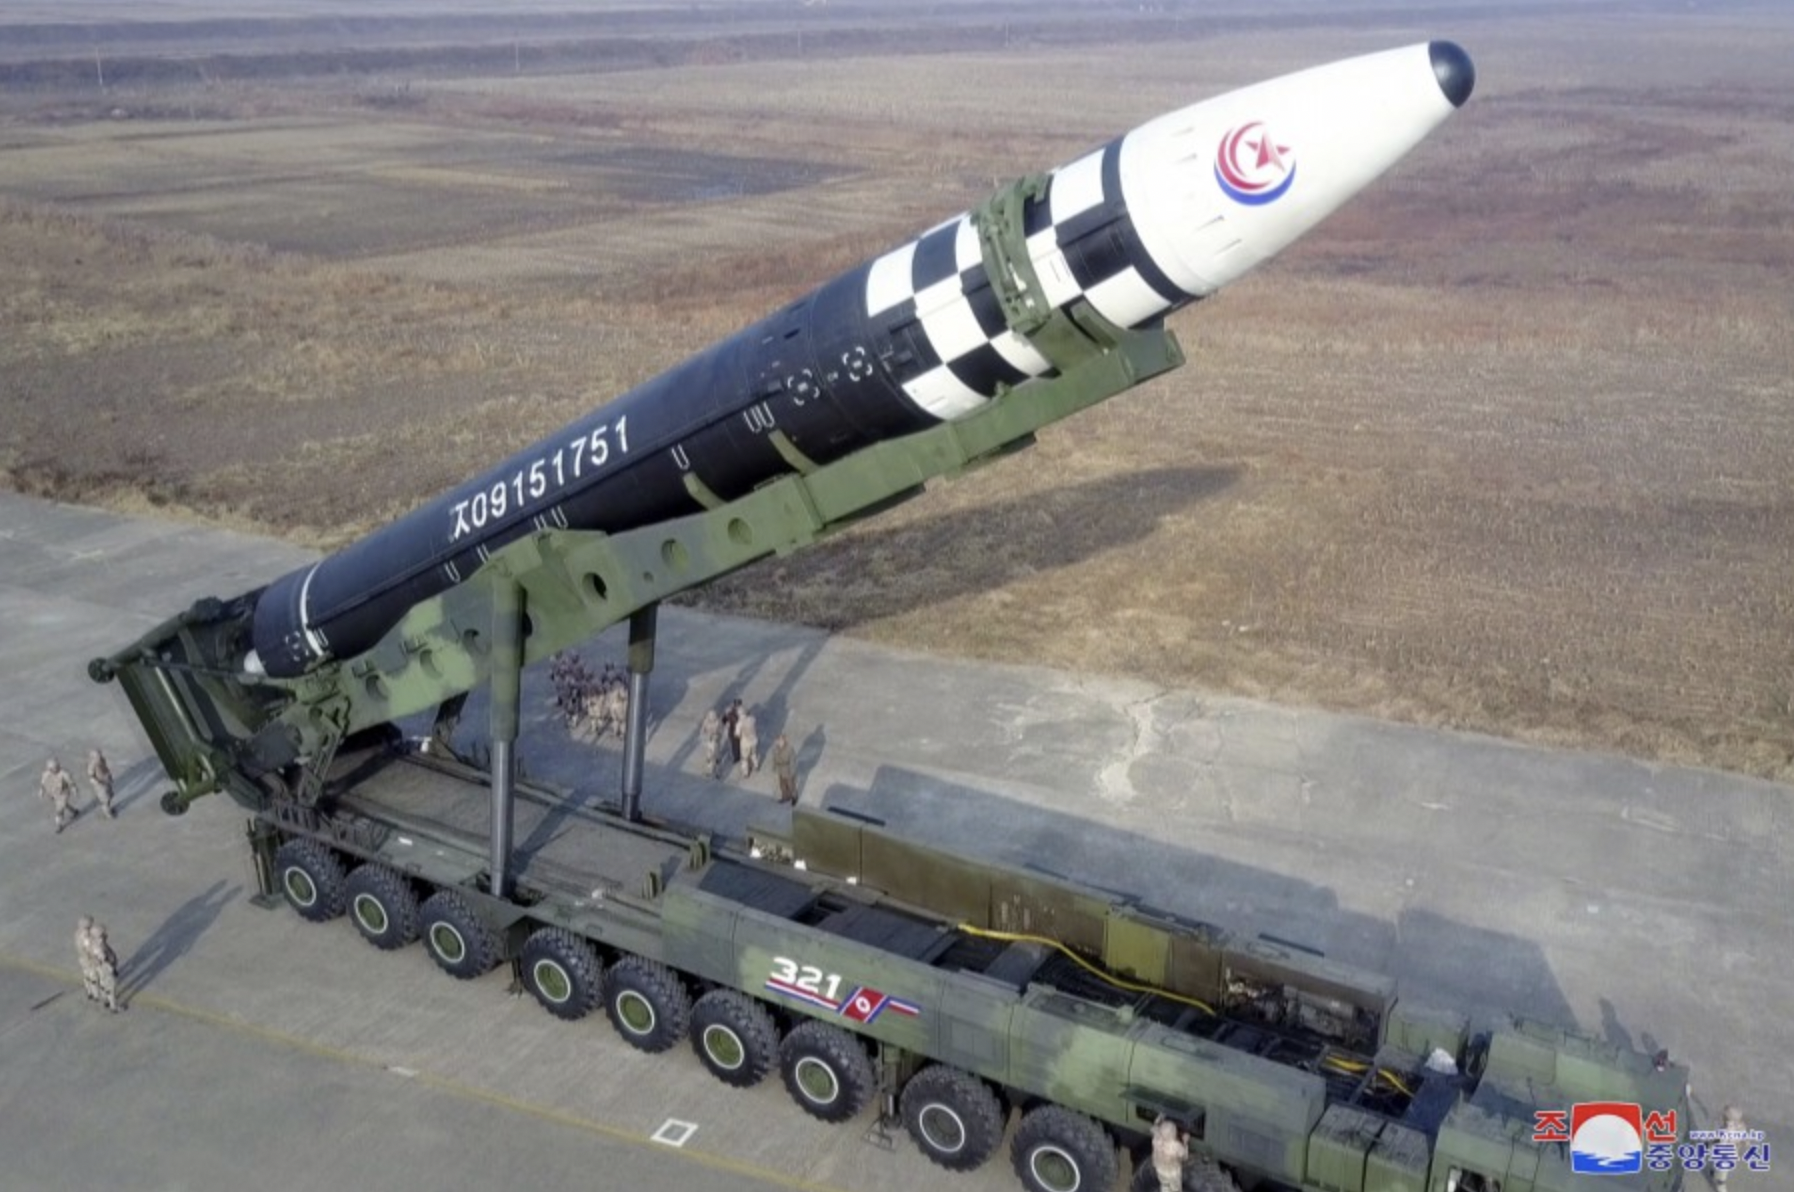 North Korea's new ballistic missile.